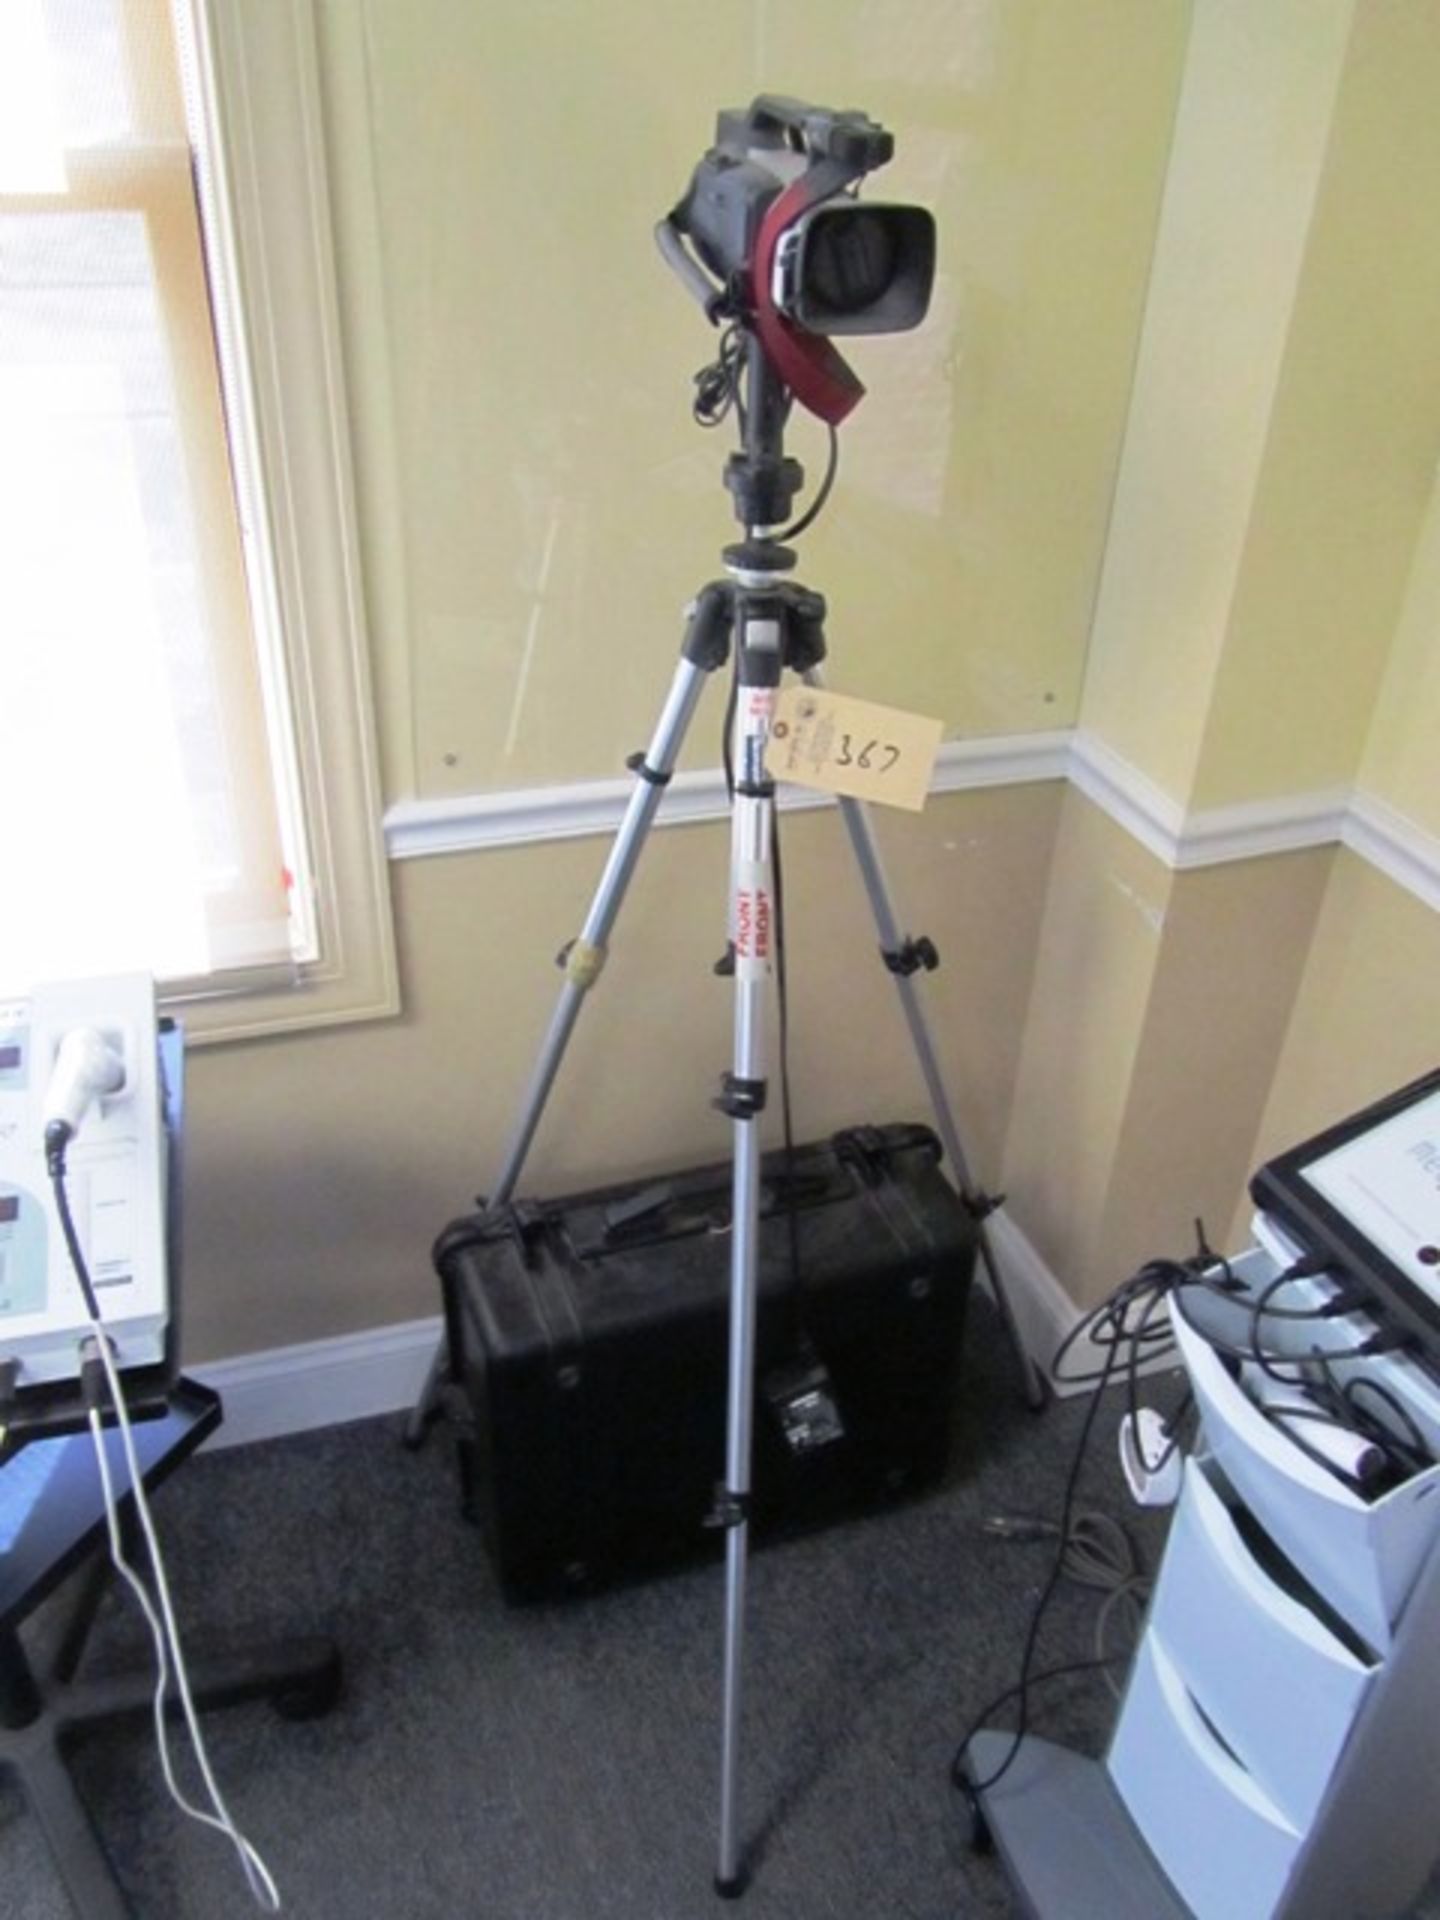 Cannon GL2 3CCD Digital Video Recorder*located Orland Park, IL